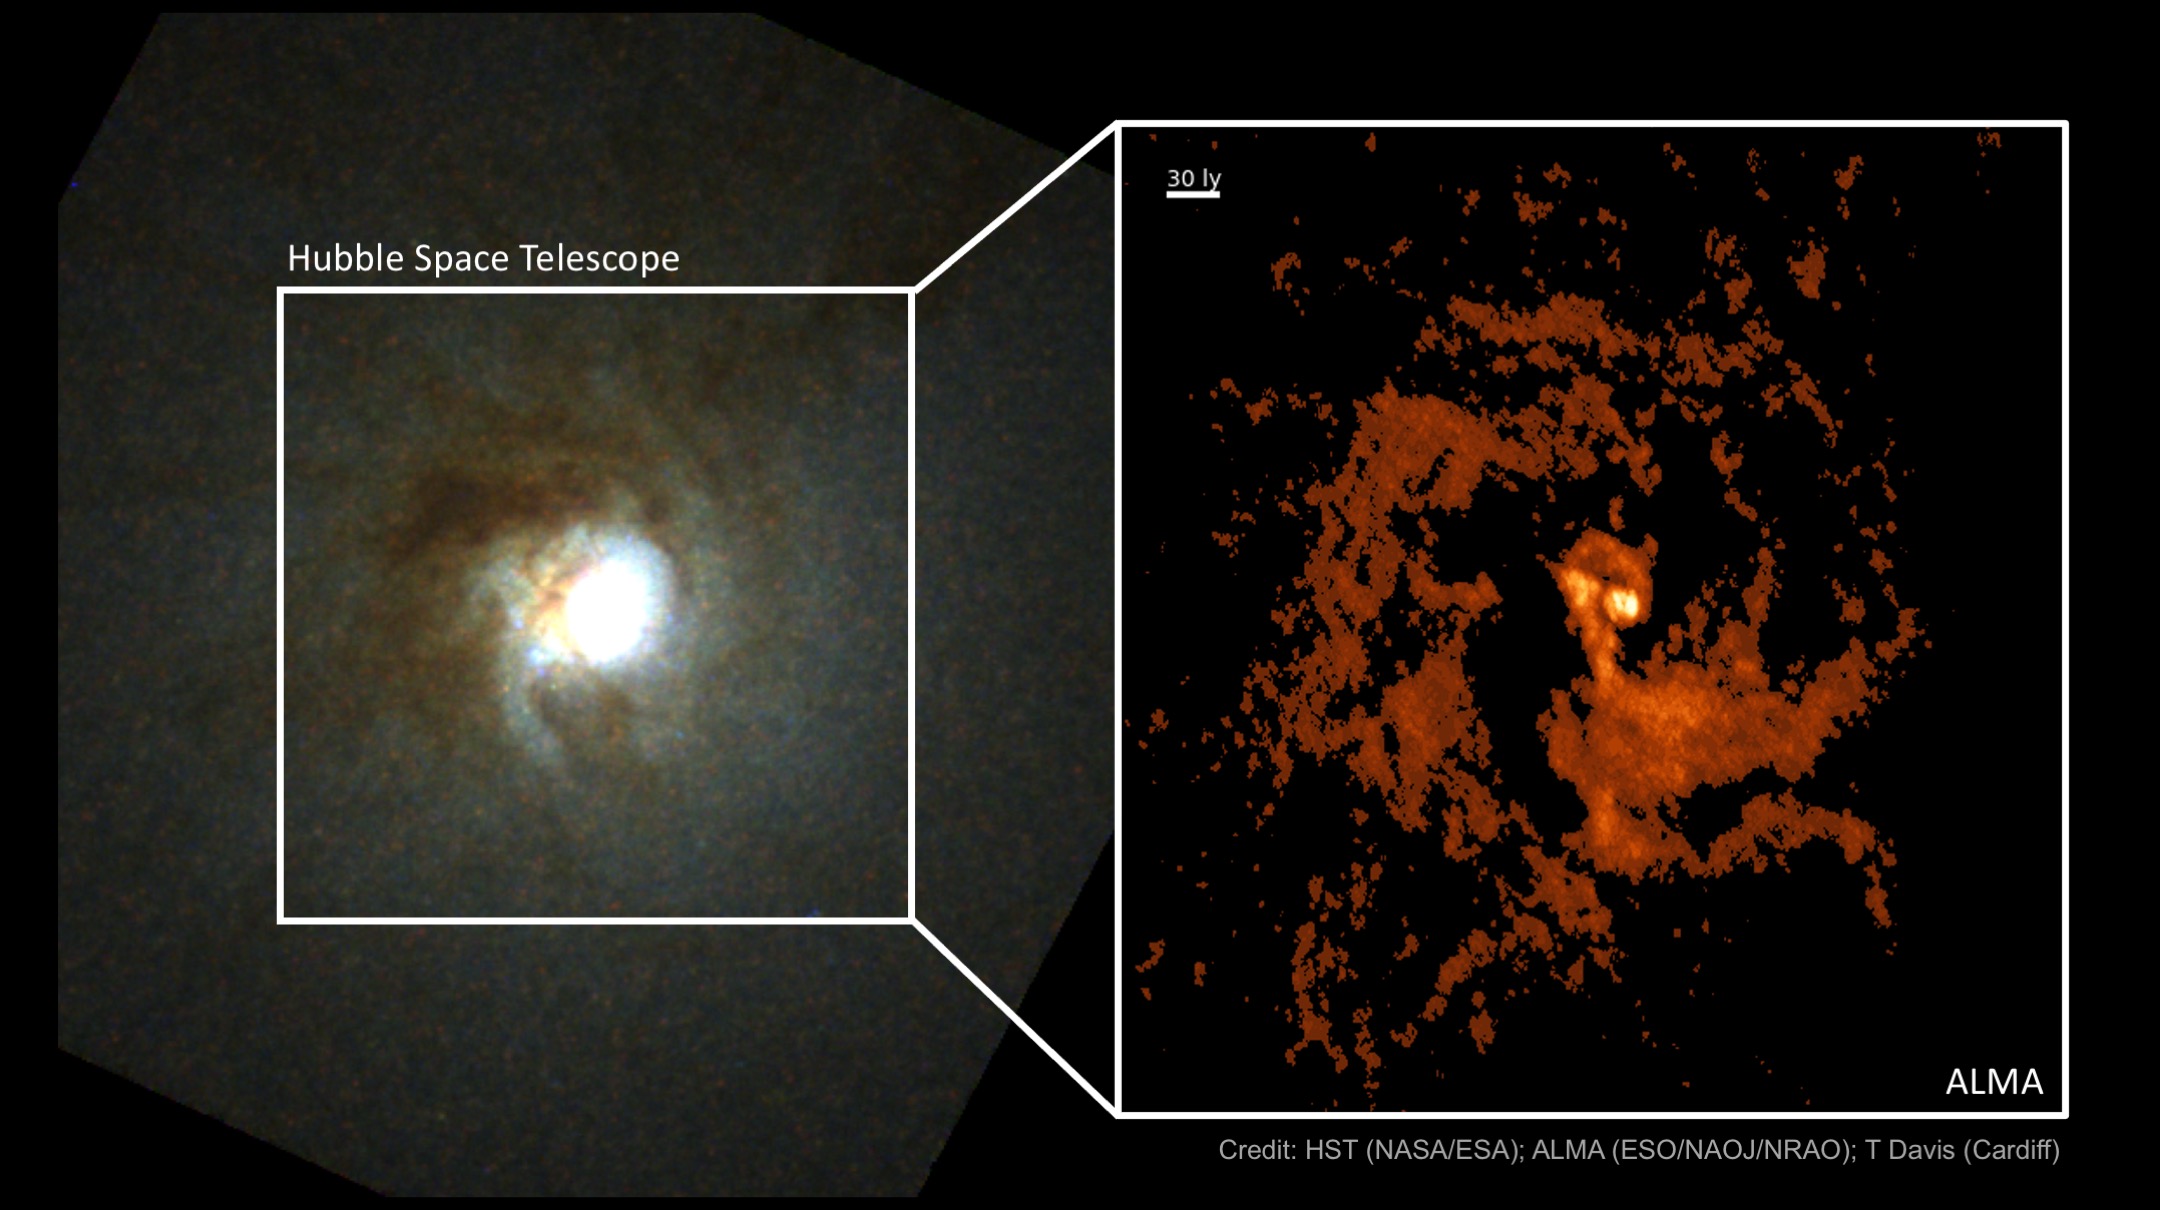 Press Release: Breakthrough in deciphering birth of supermassive black holes